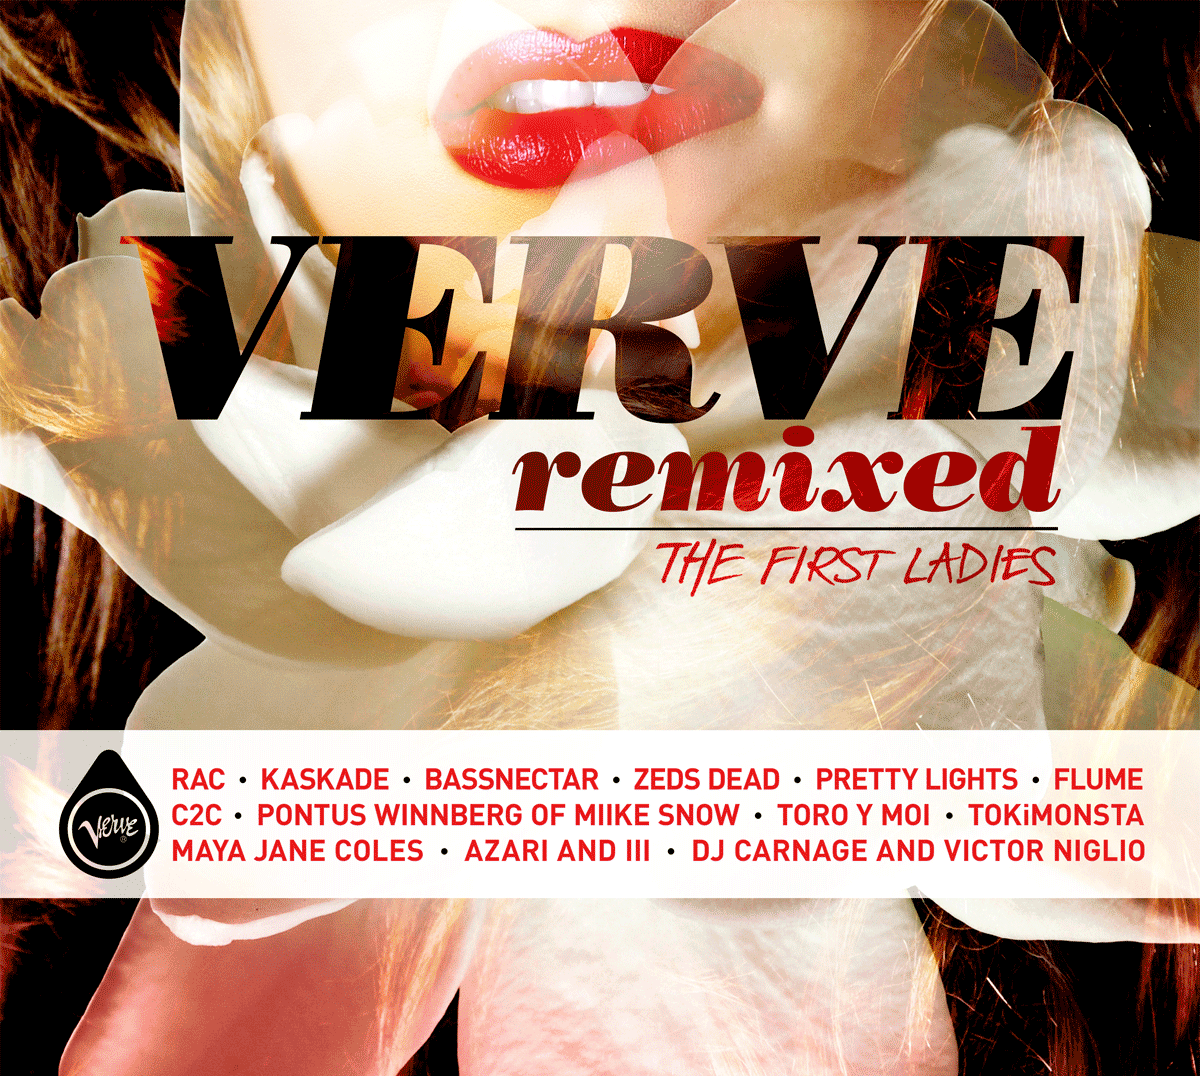 Verve Remixed